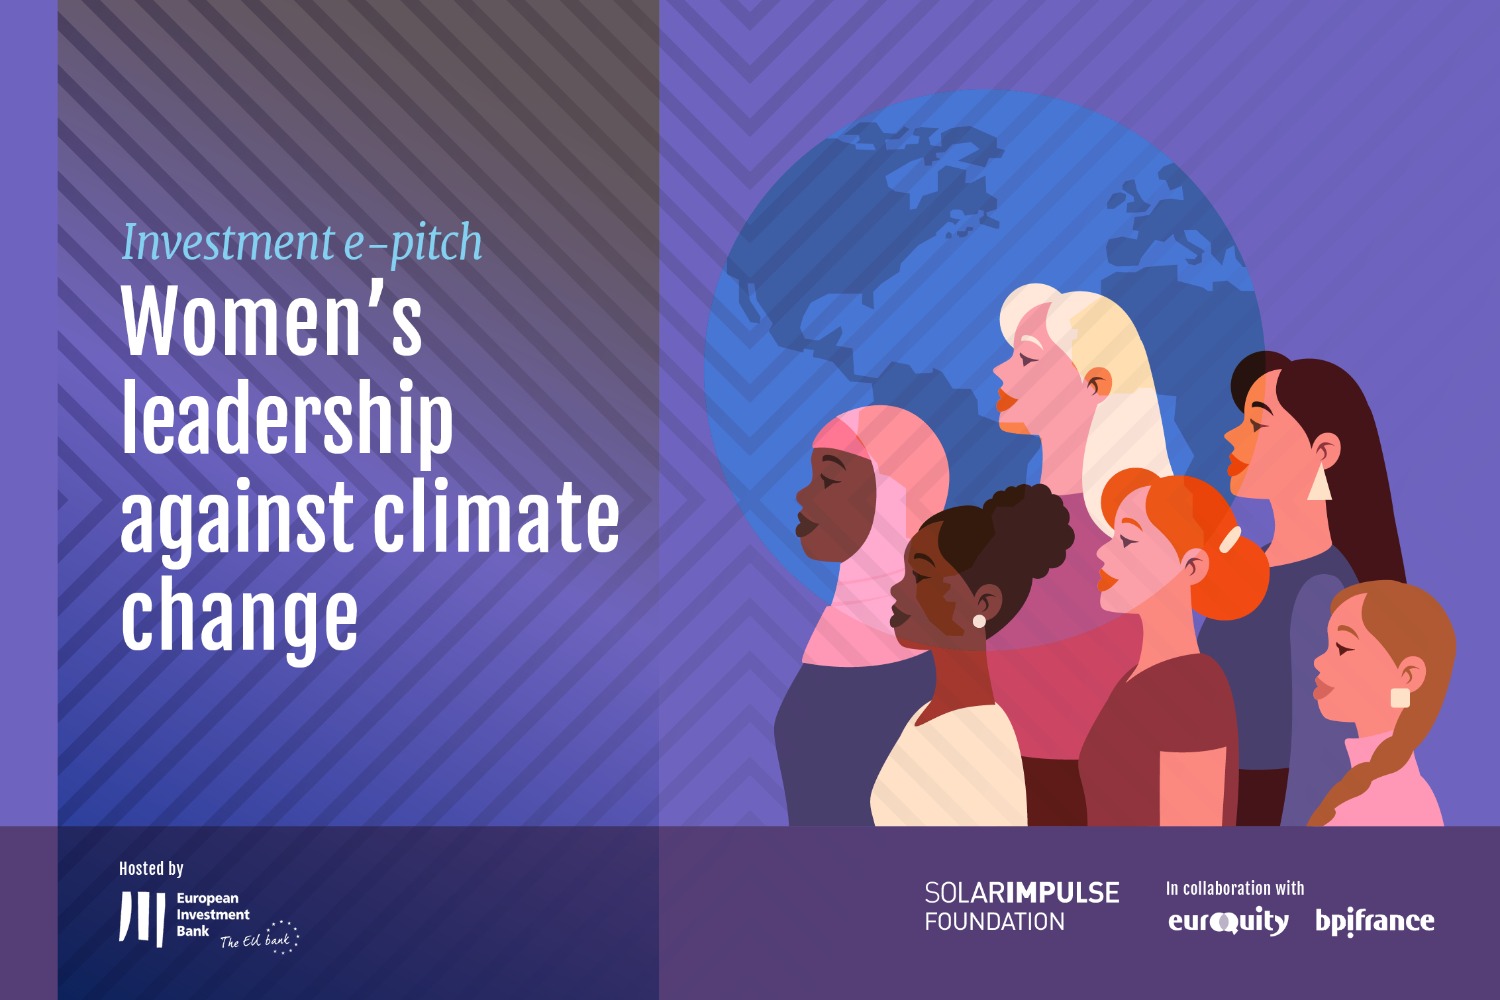 E-Pitch Solar Impulse Investment - "Women's leadership against climate change" 